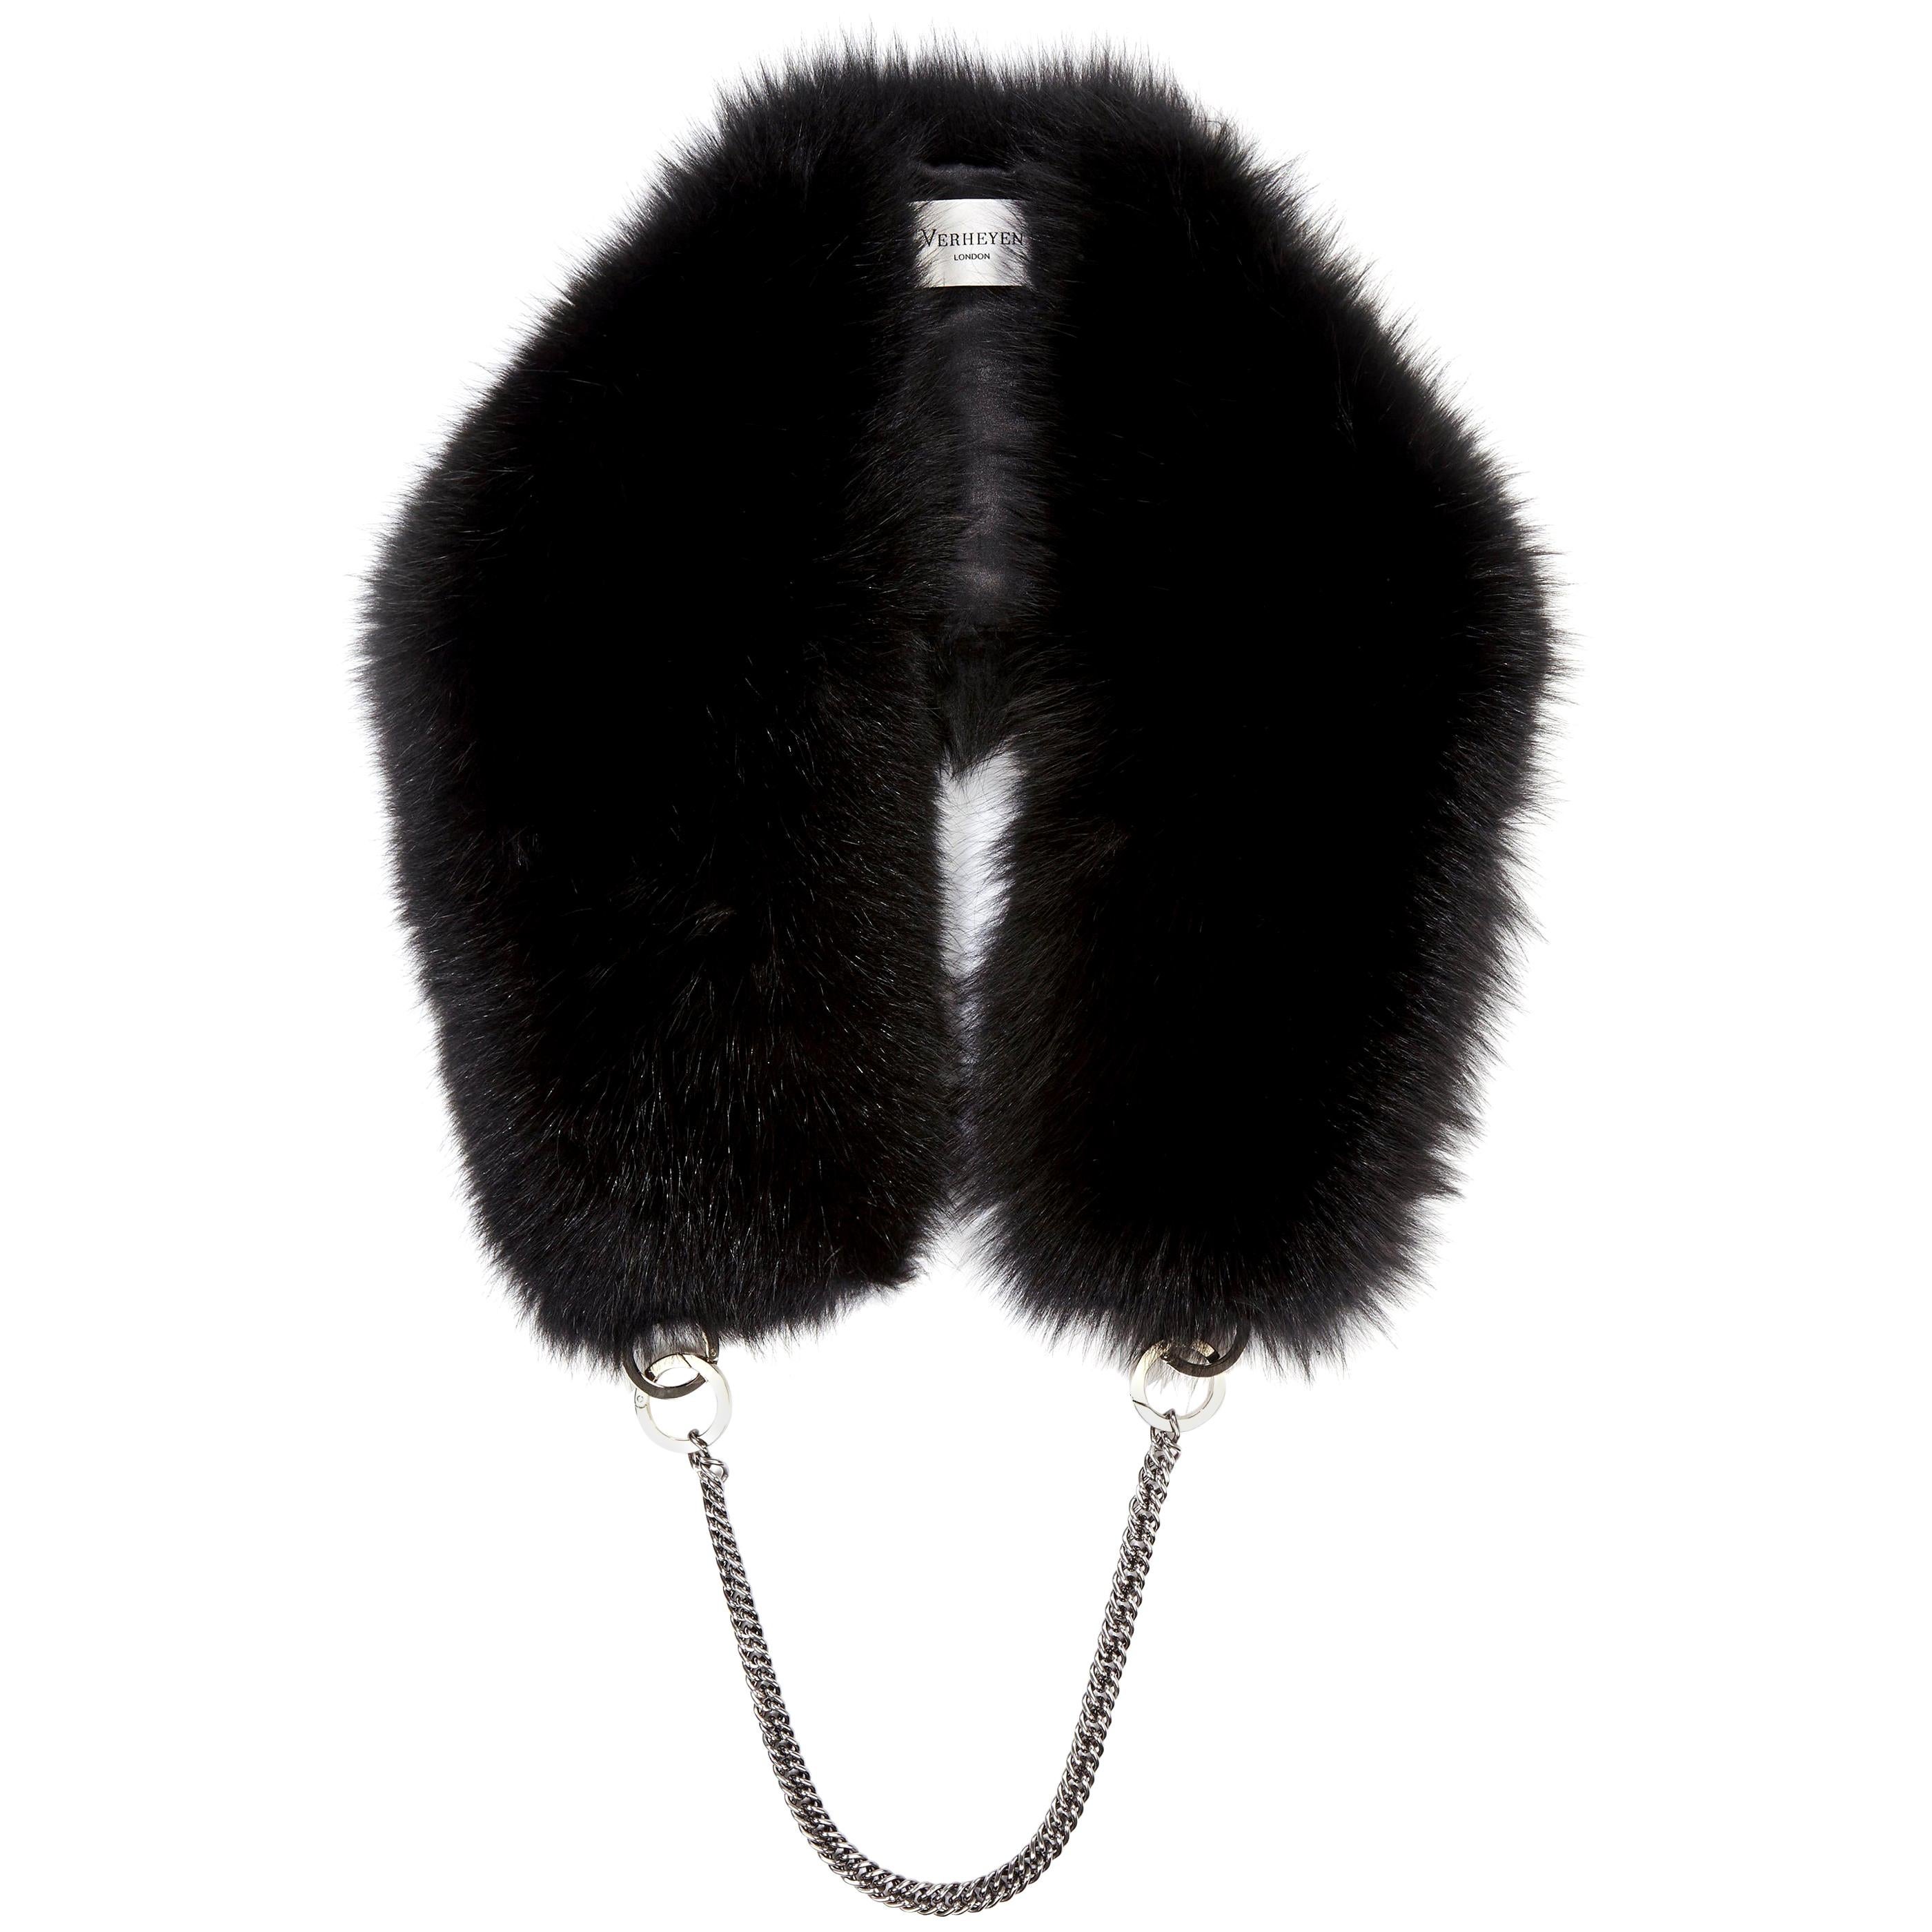 Verheyen London Chained Stole in Black Fox Fur & Chain - Brand New